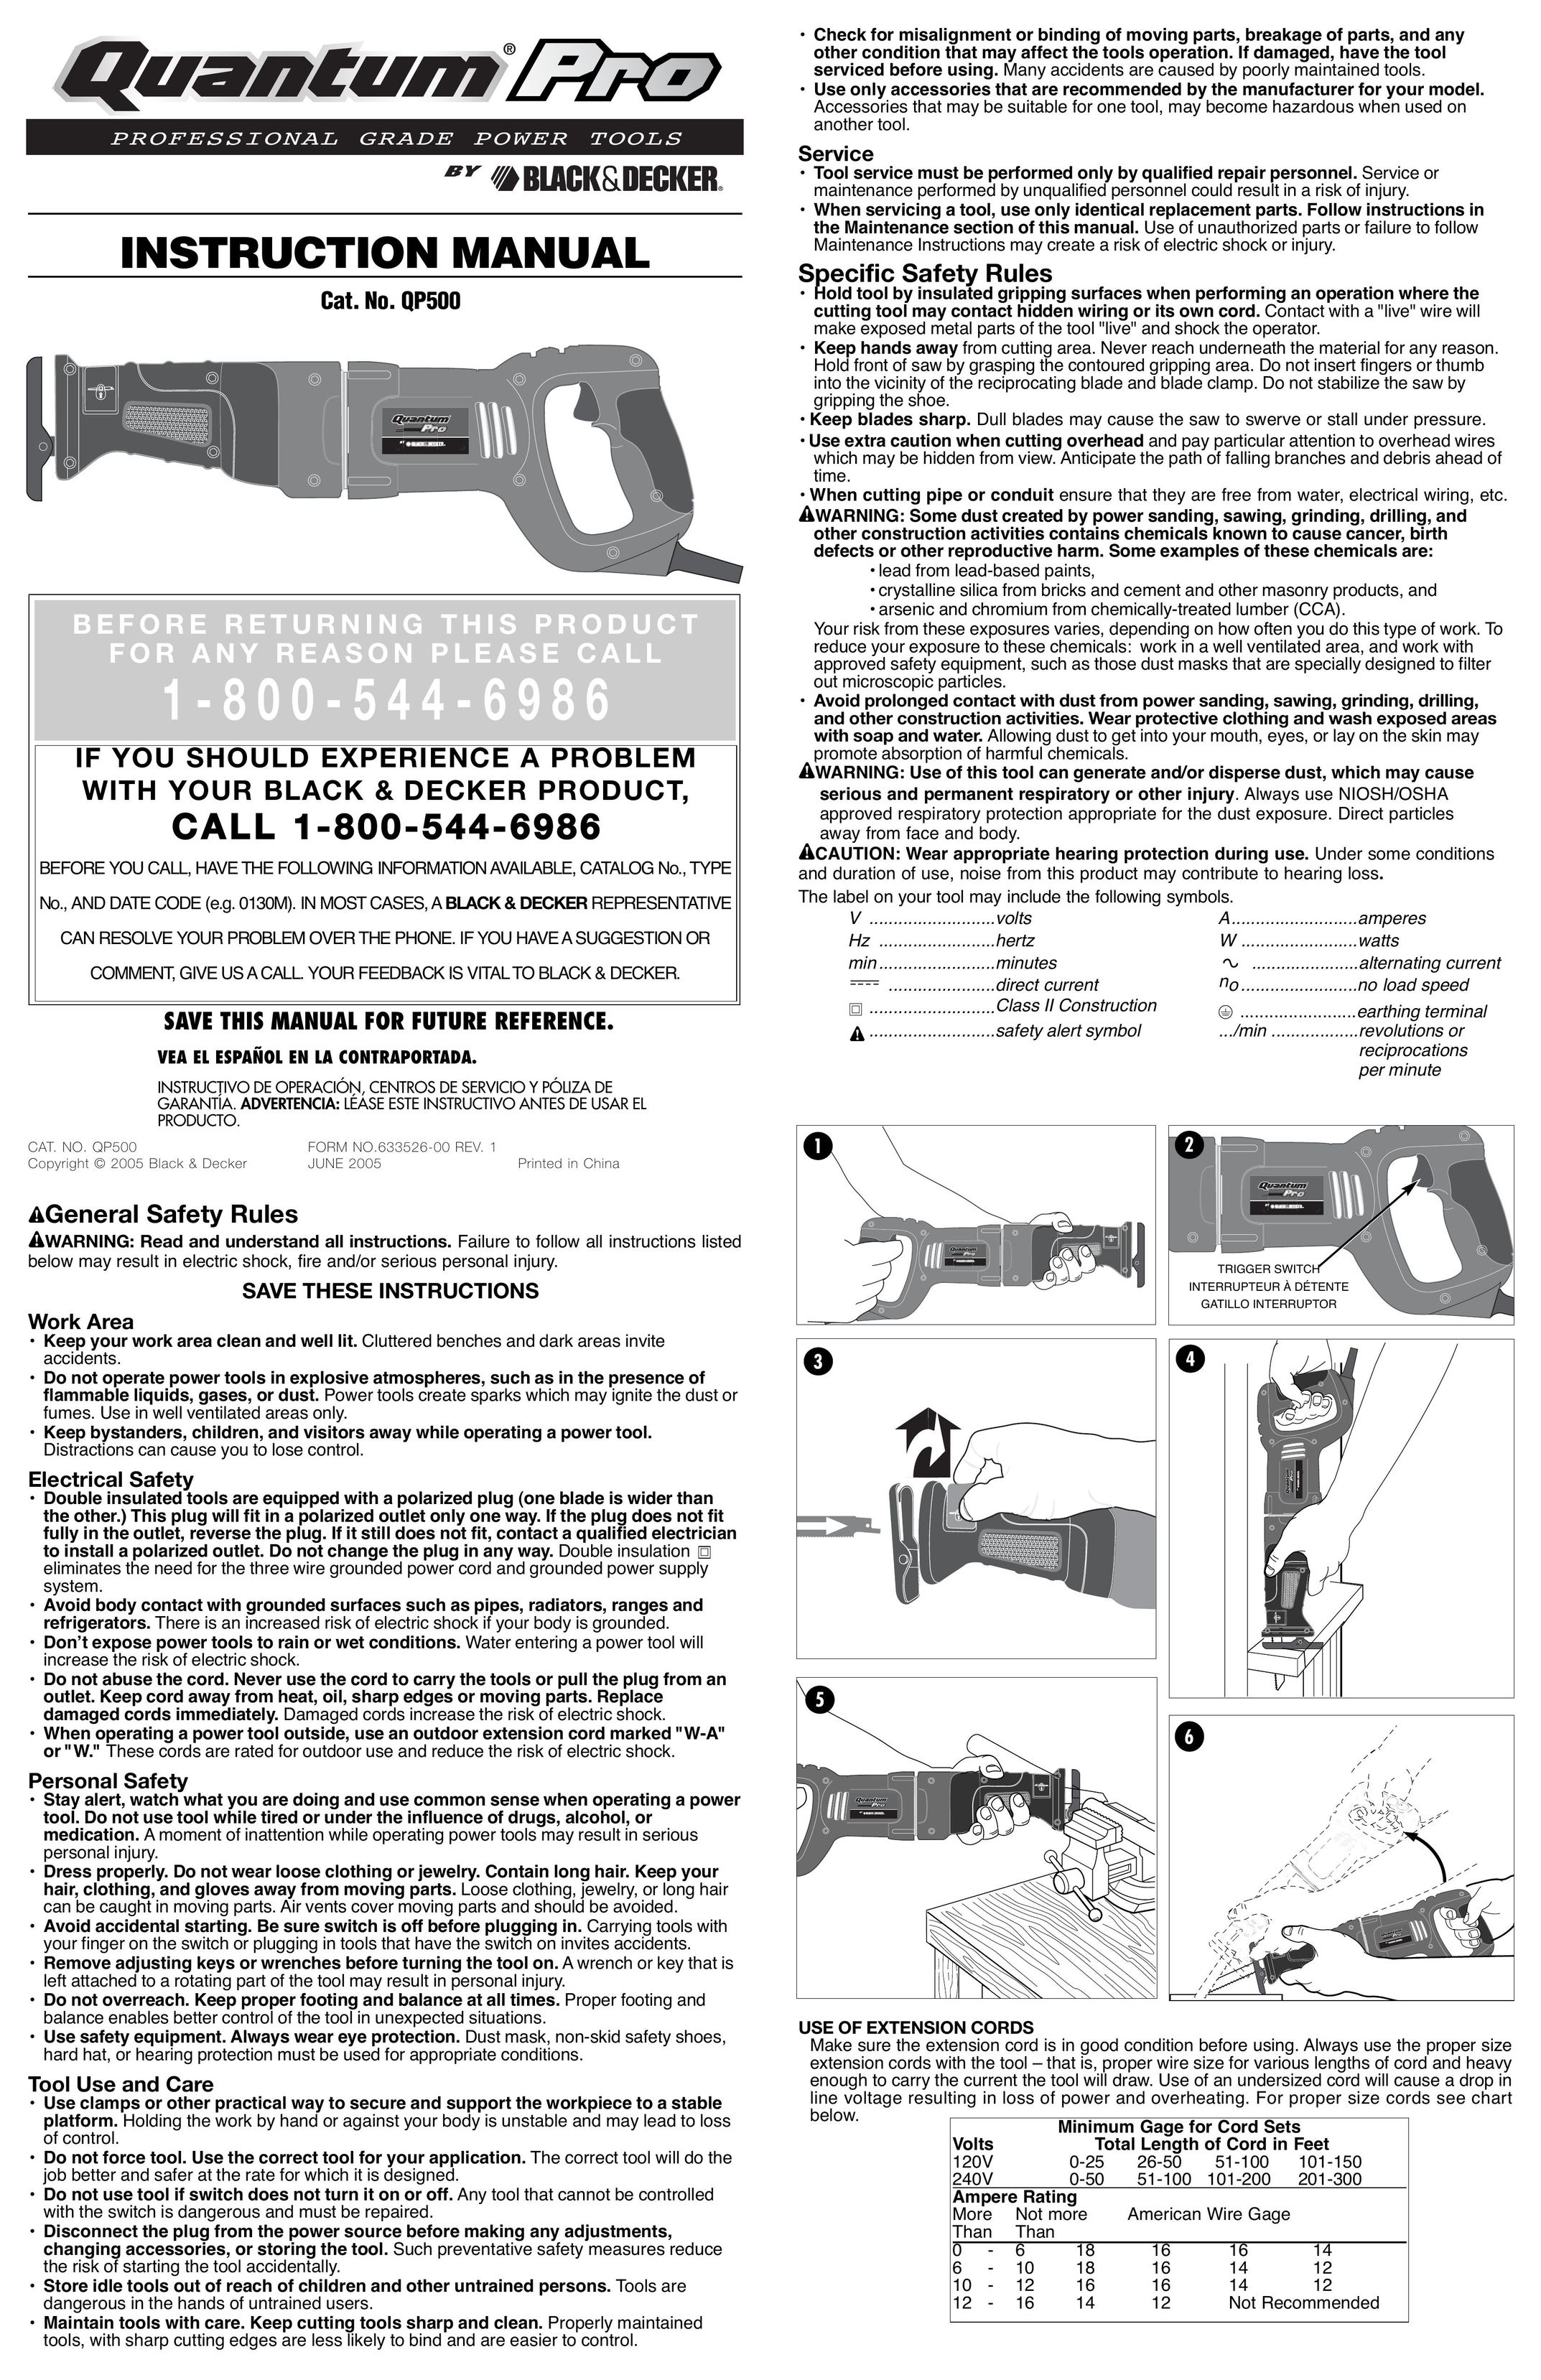 Black & Decker 633526-00 Saw User Manual